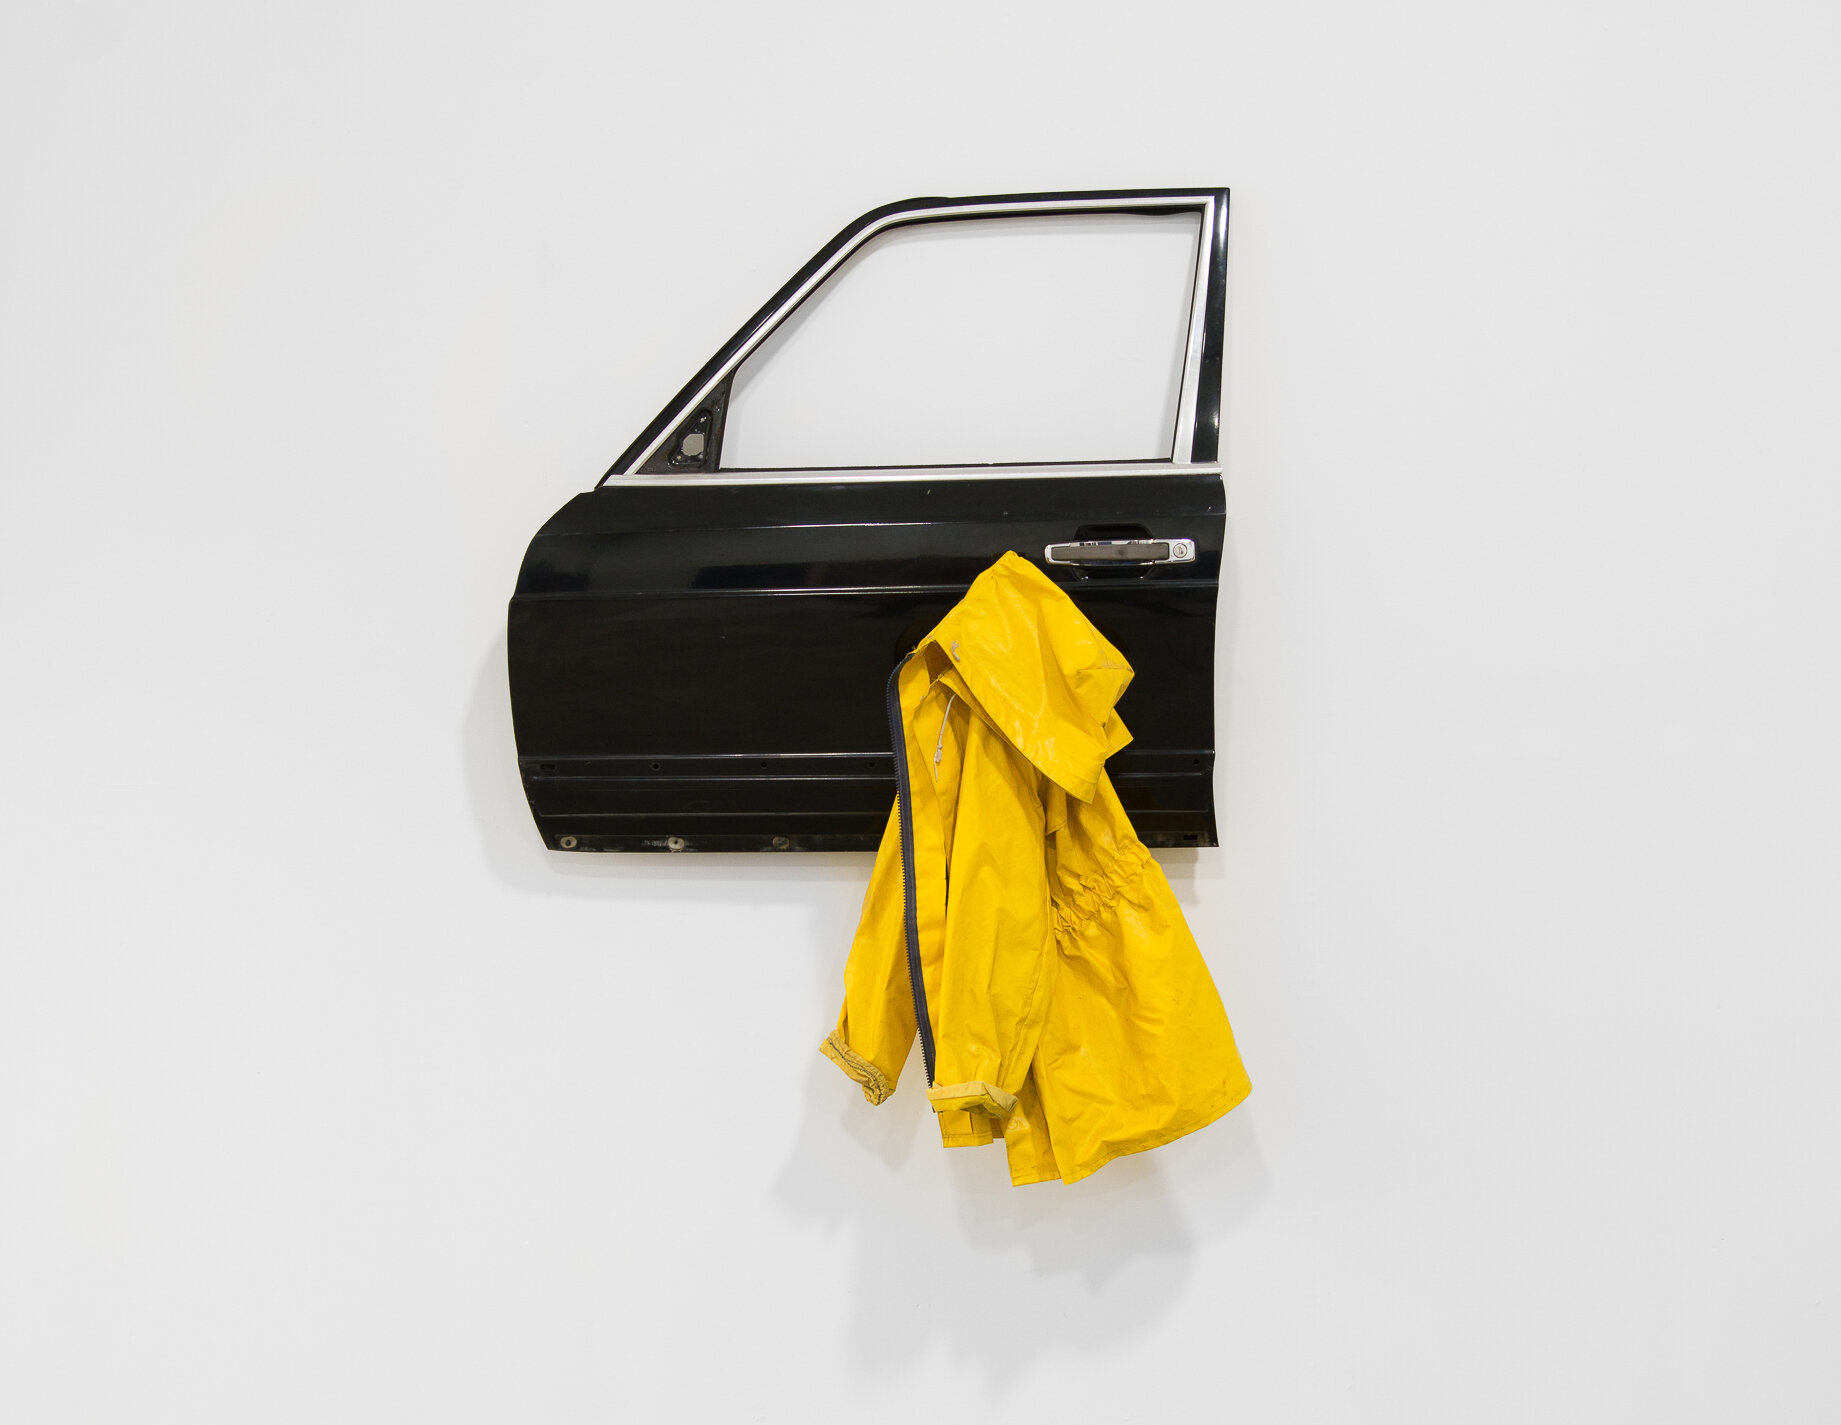  JOHNNY ABRAHAMS   Untitled, 2020 car door with rain coat 60" x 42" x 6" 